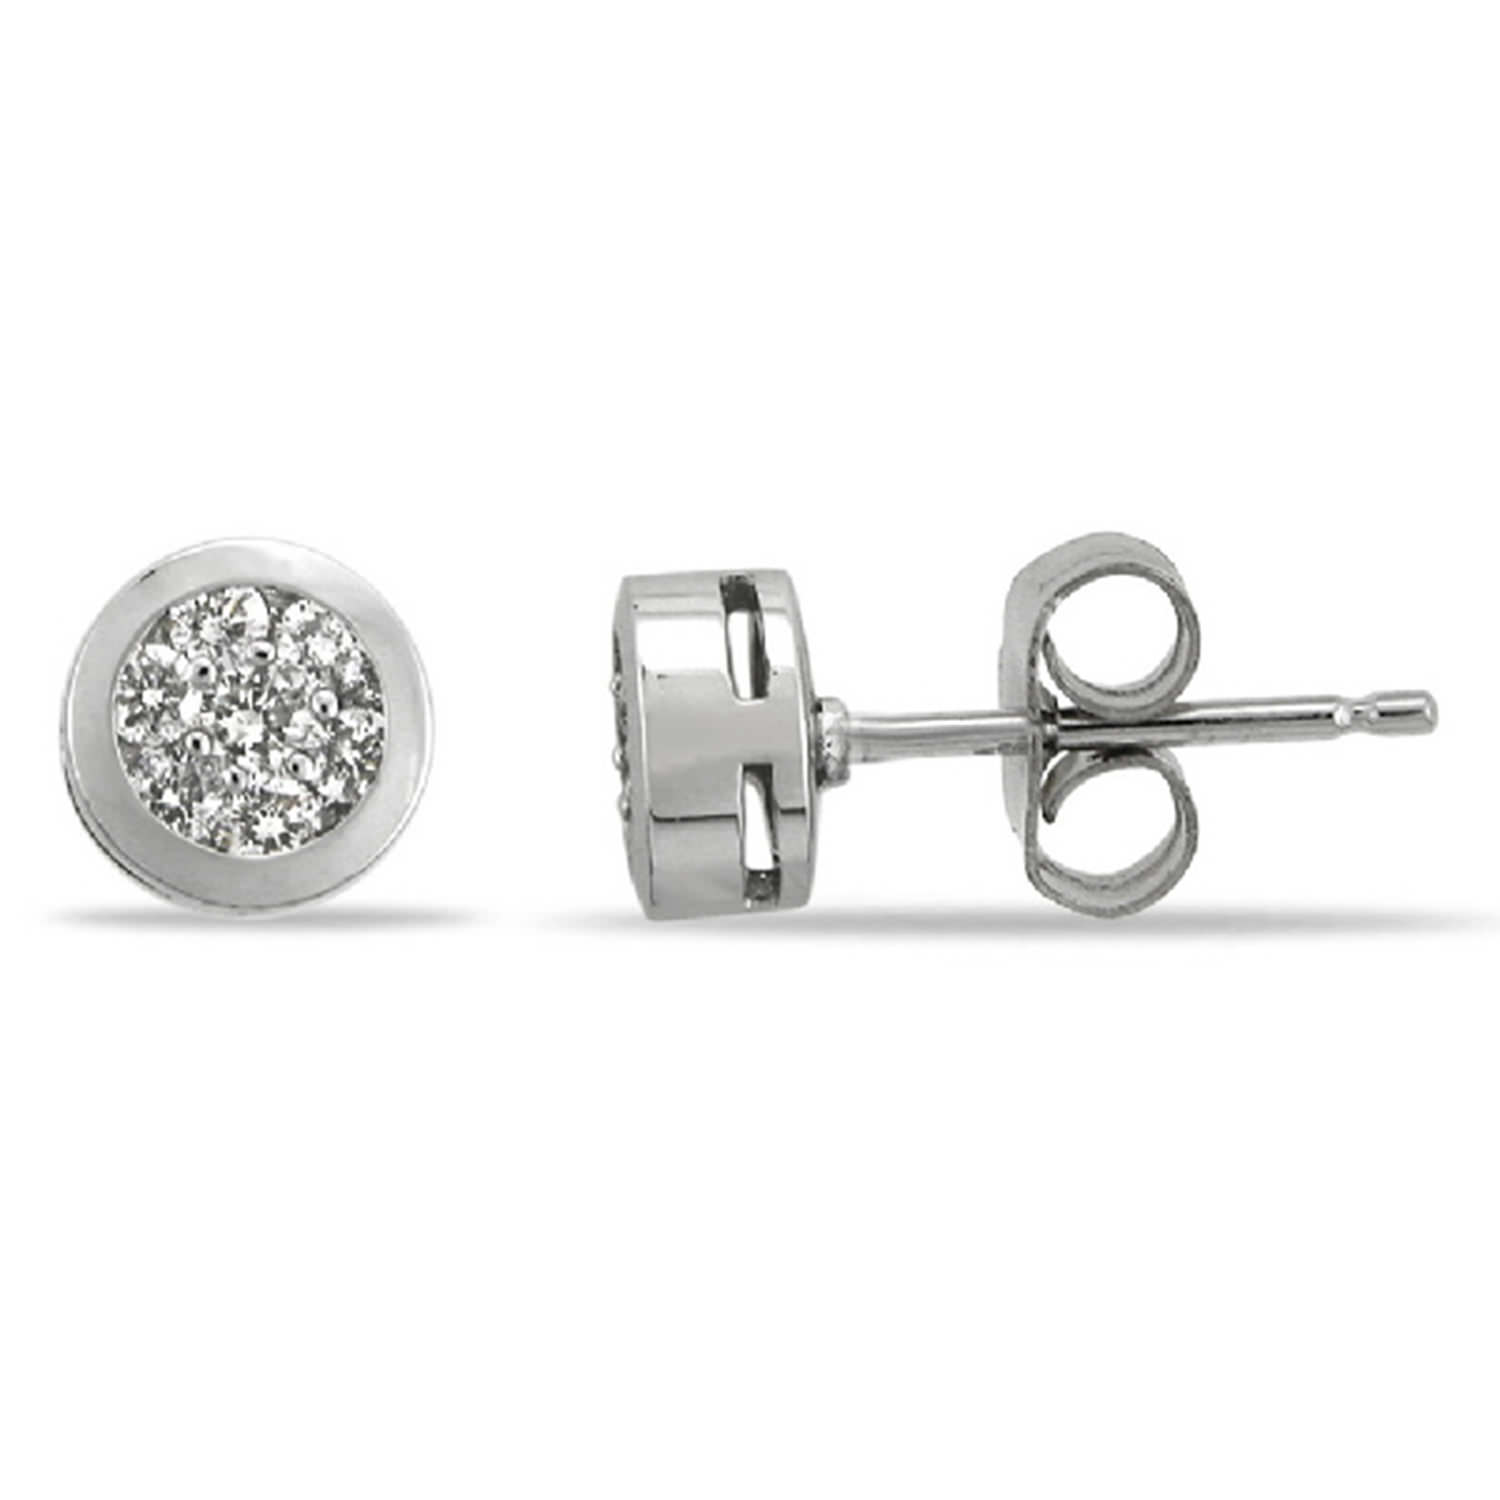 Women&#39;s Day Sale 0.33 Natural Diamond 18k White Gold Stud Earrings Jewelry | eBay